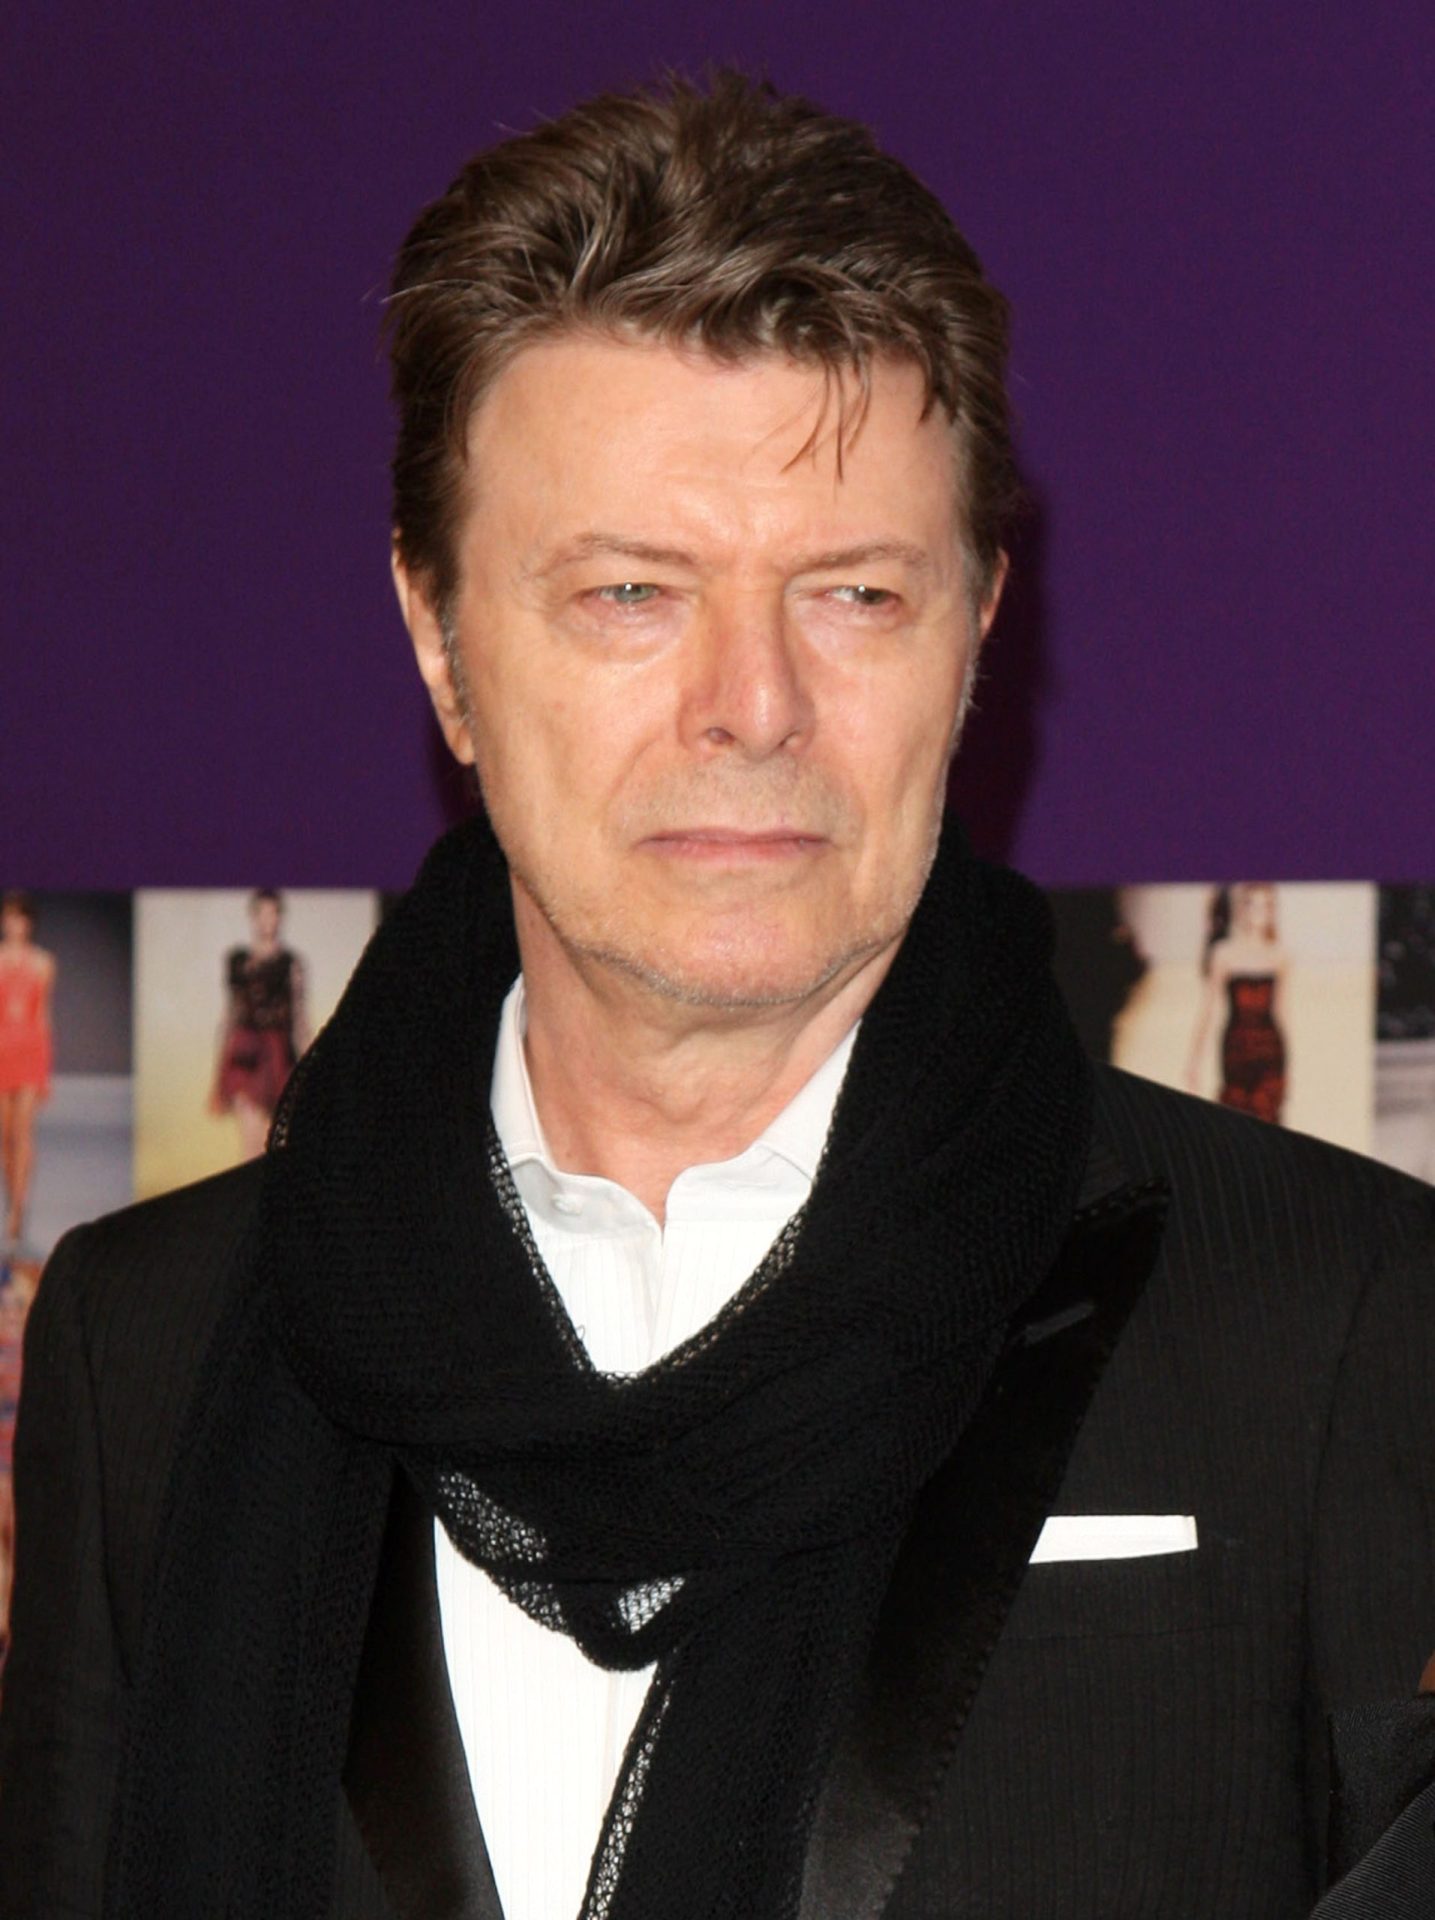 David Bowie morre aos 69 anos